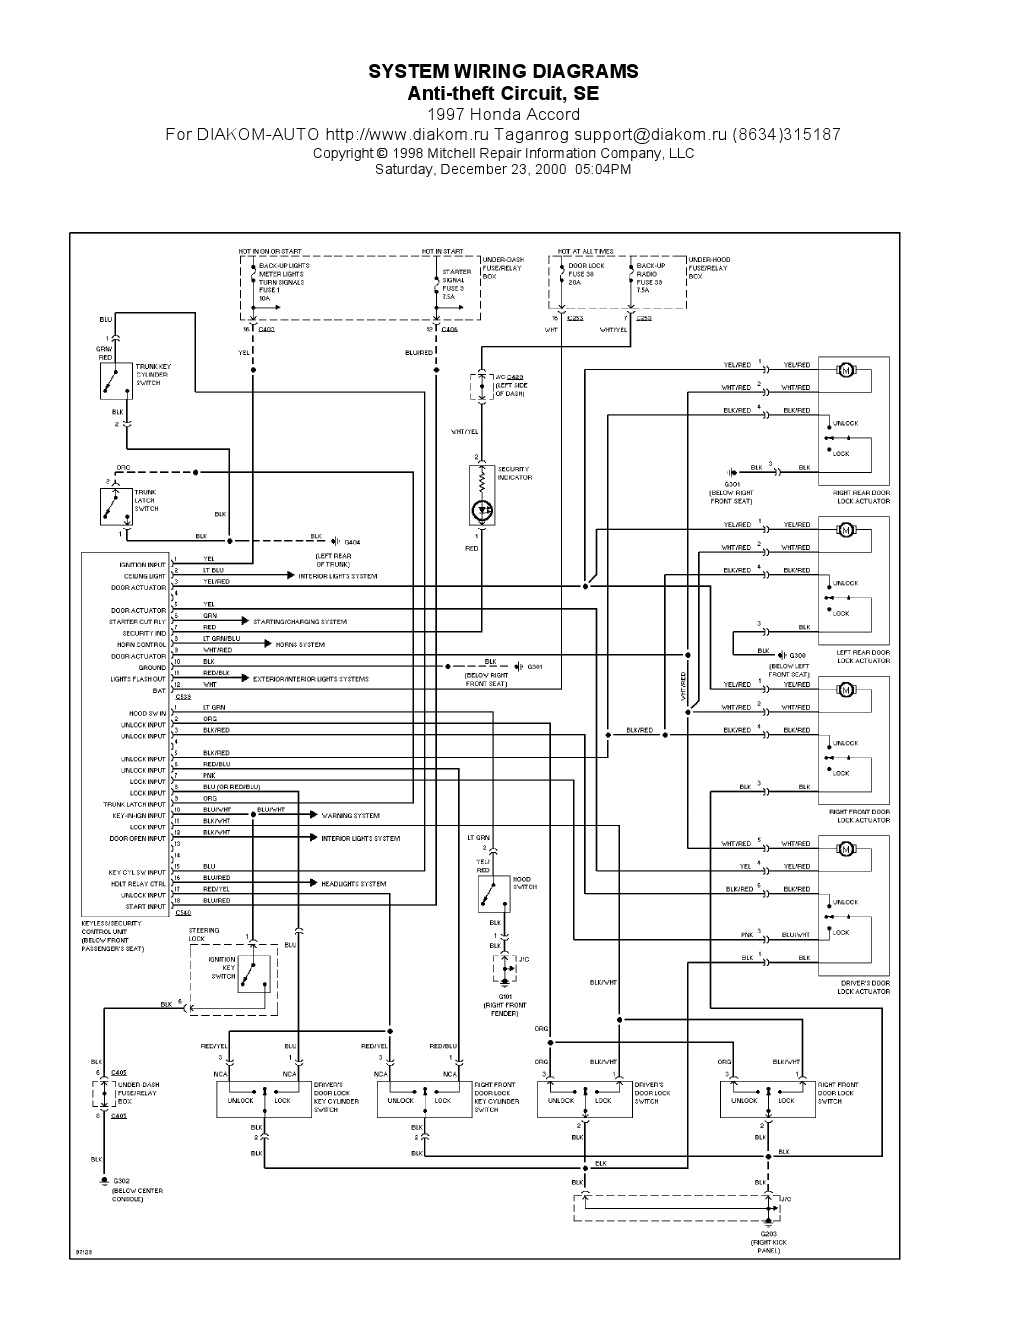 honda accord wiring diagrams home wiring diagram wiring diagram honda accord 2007 honda accord schematics wiring